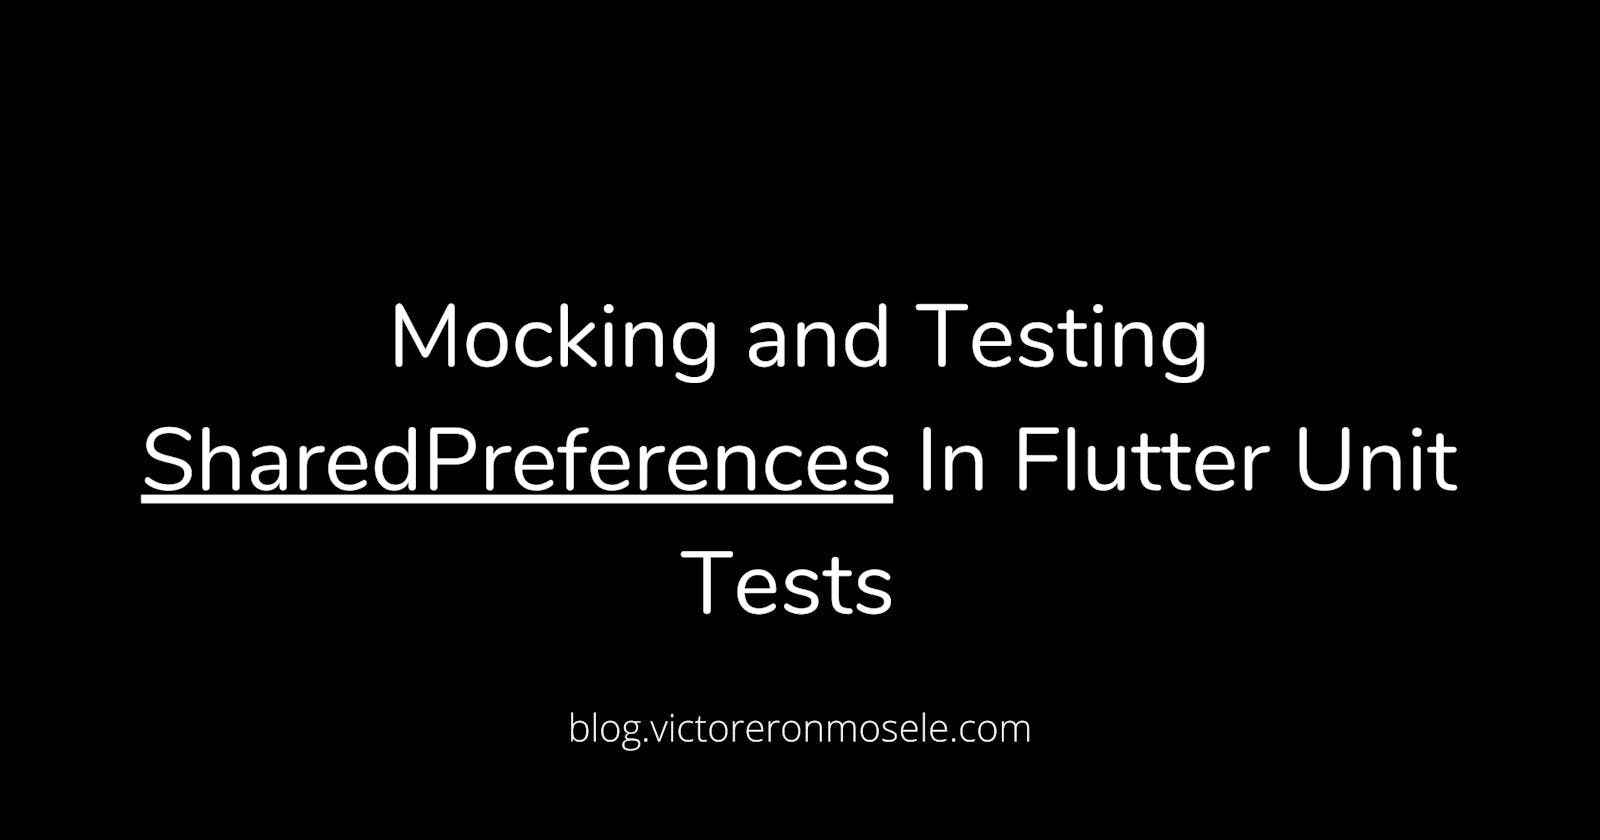 Mocking and Testing Shared Preferences in Flutter Unit Tests